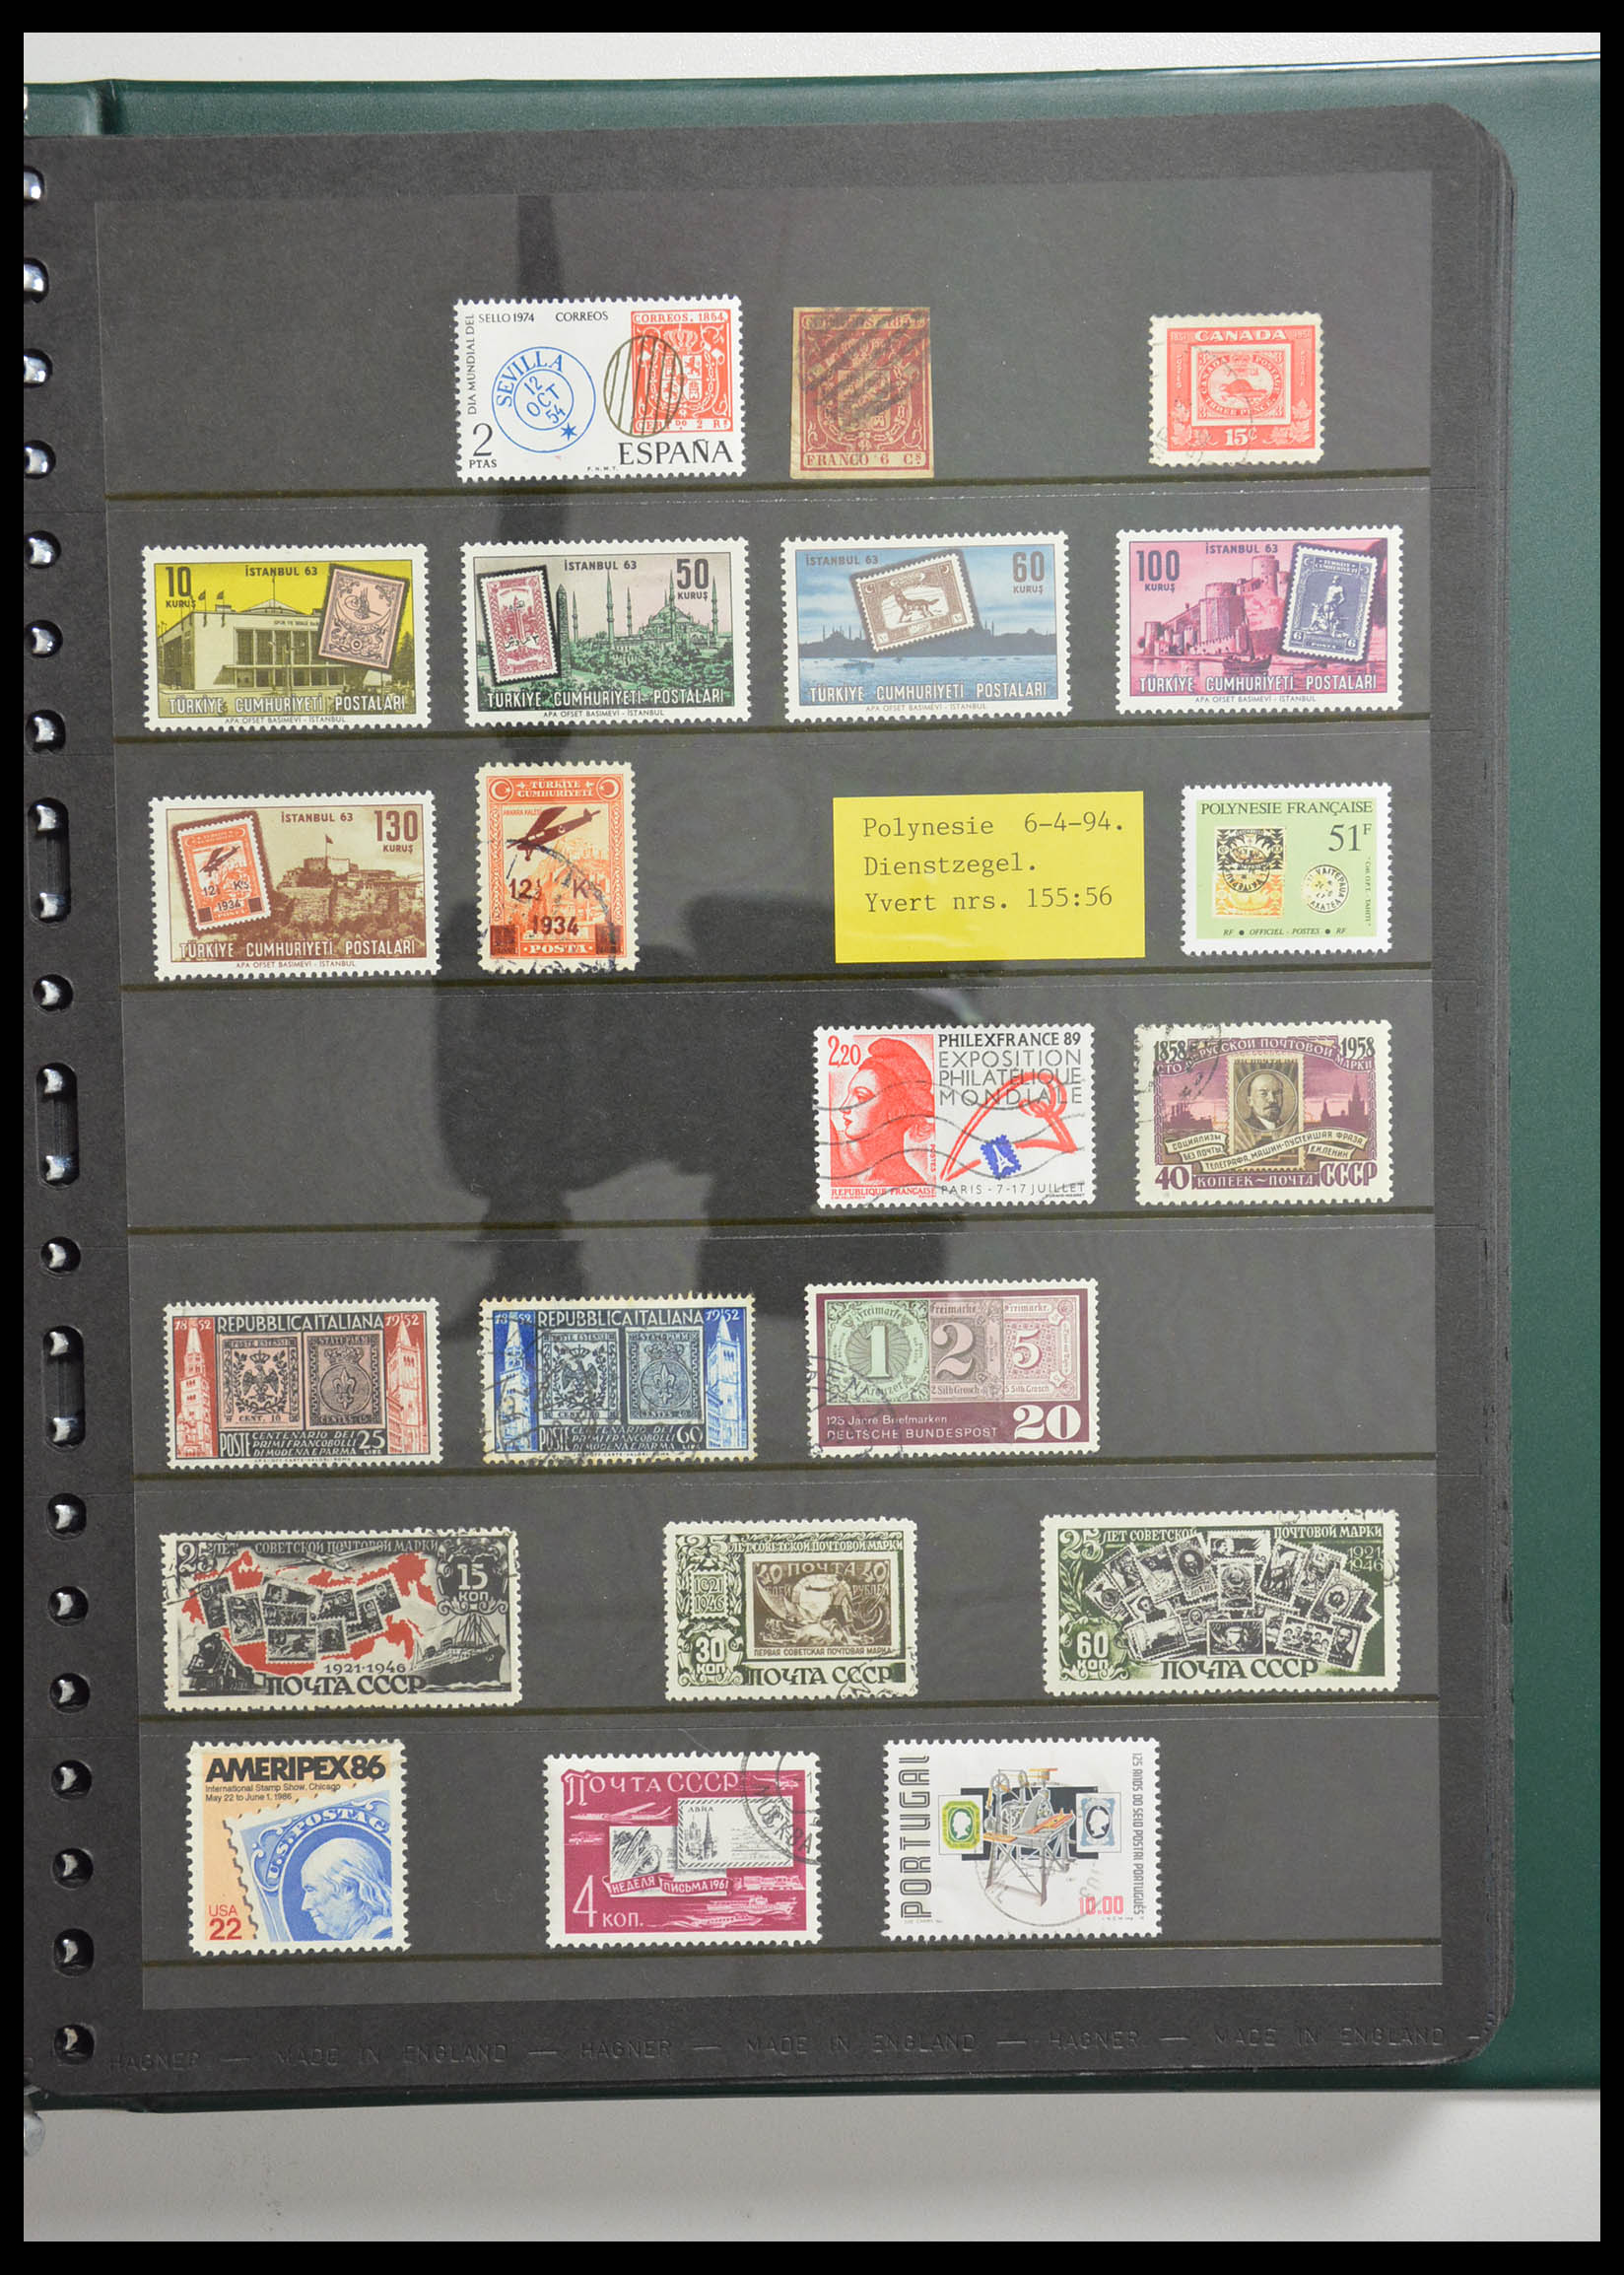 28337 010 - 28337 Postzegel op postzegel 1840-2001.